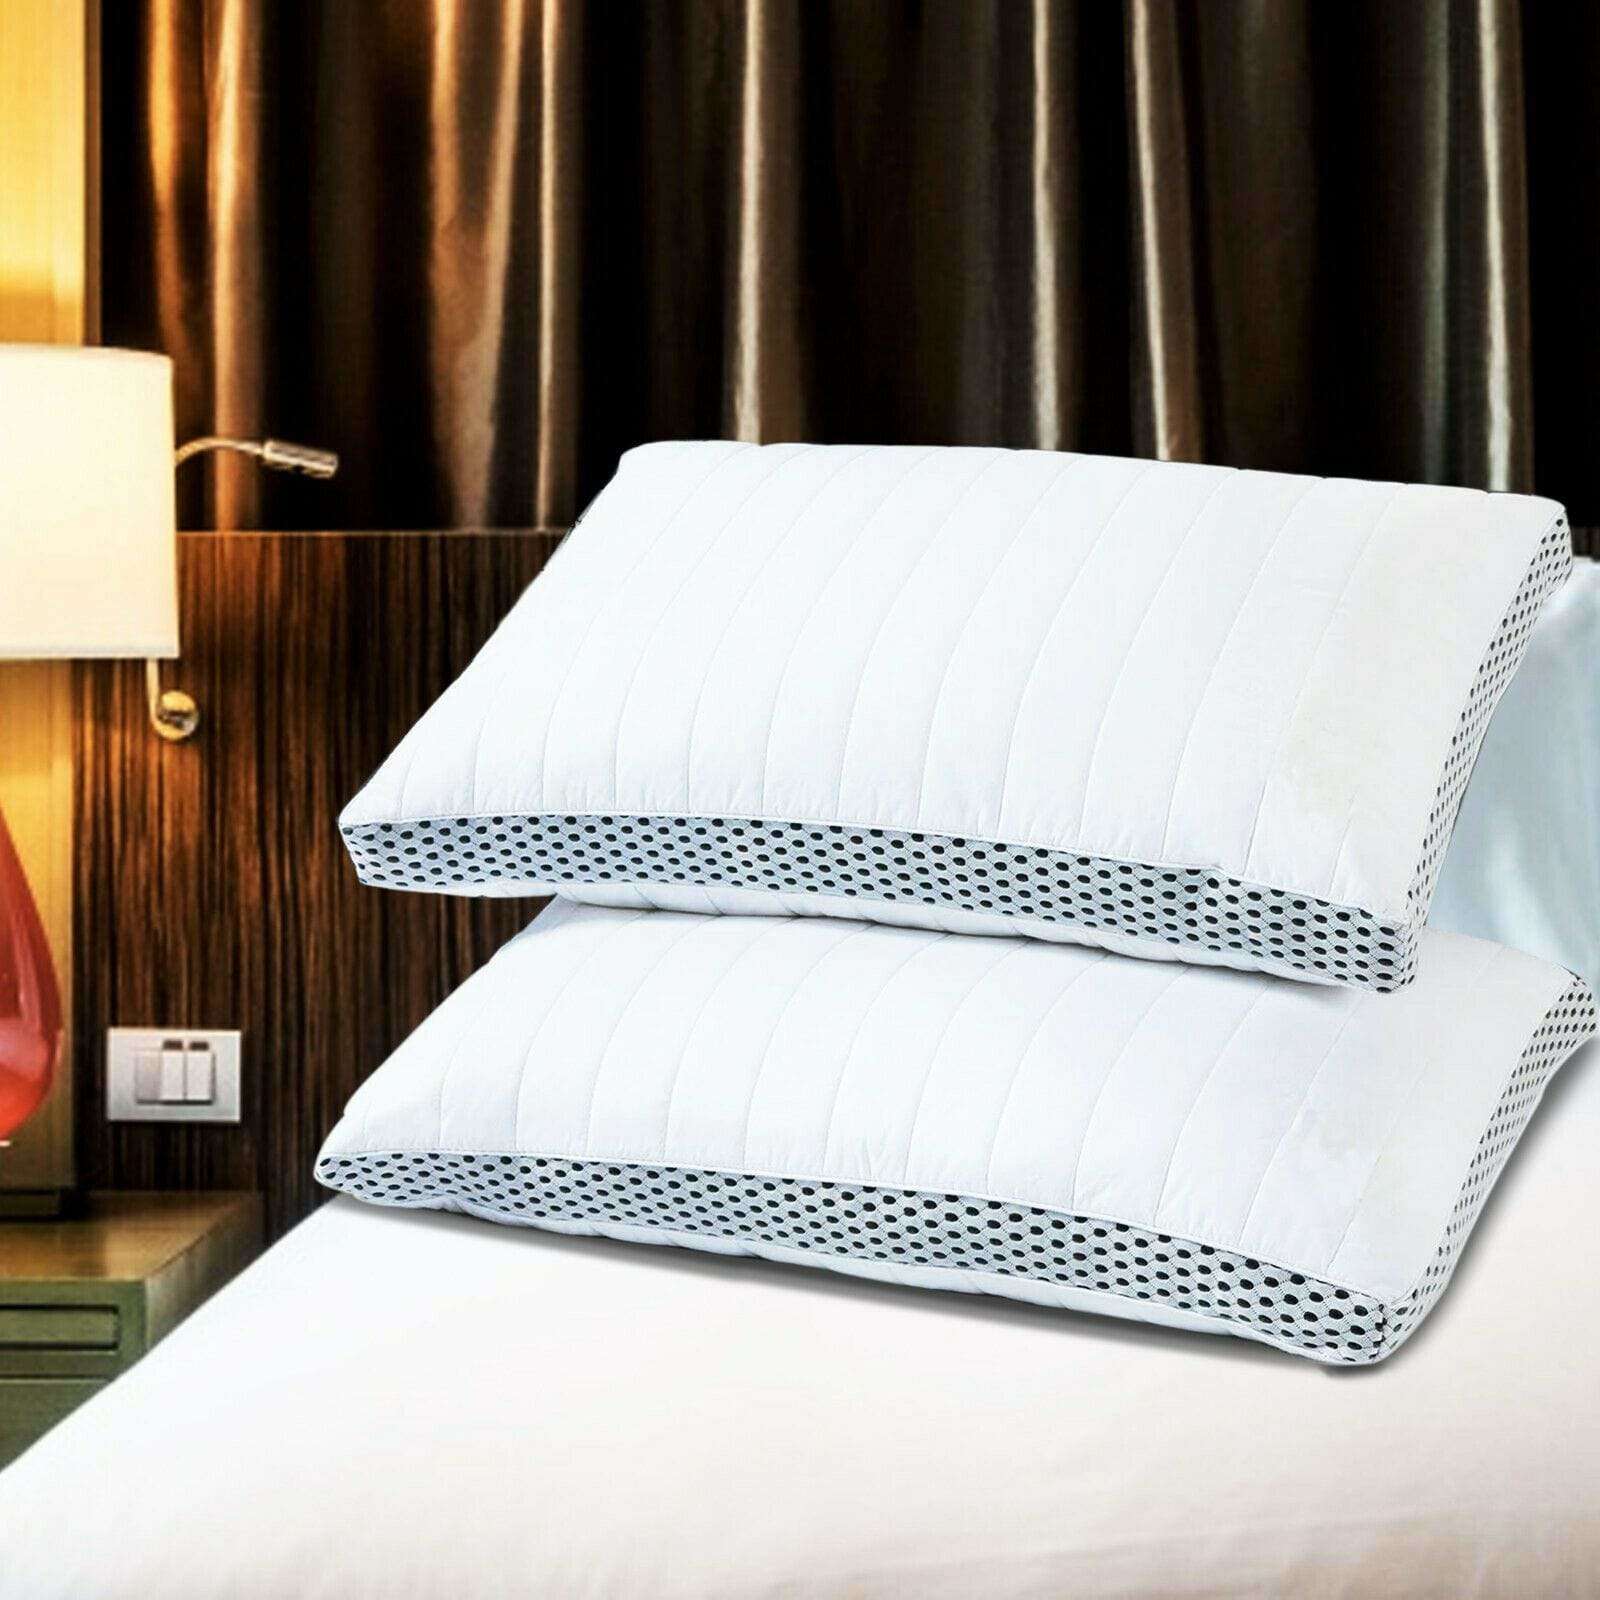 Sprung-Pillows-with-Microfibre-Comfort